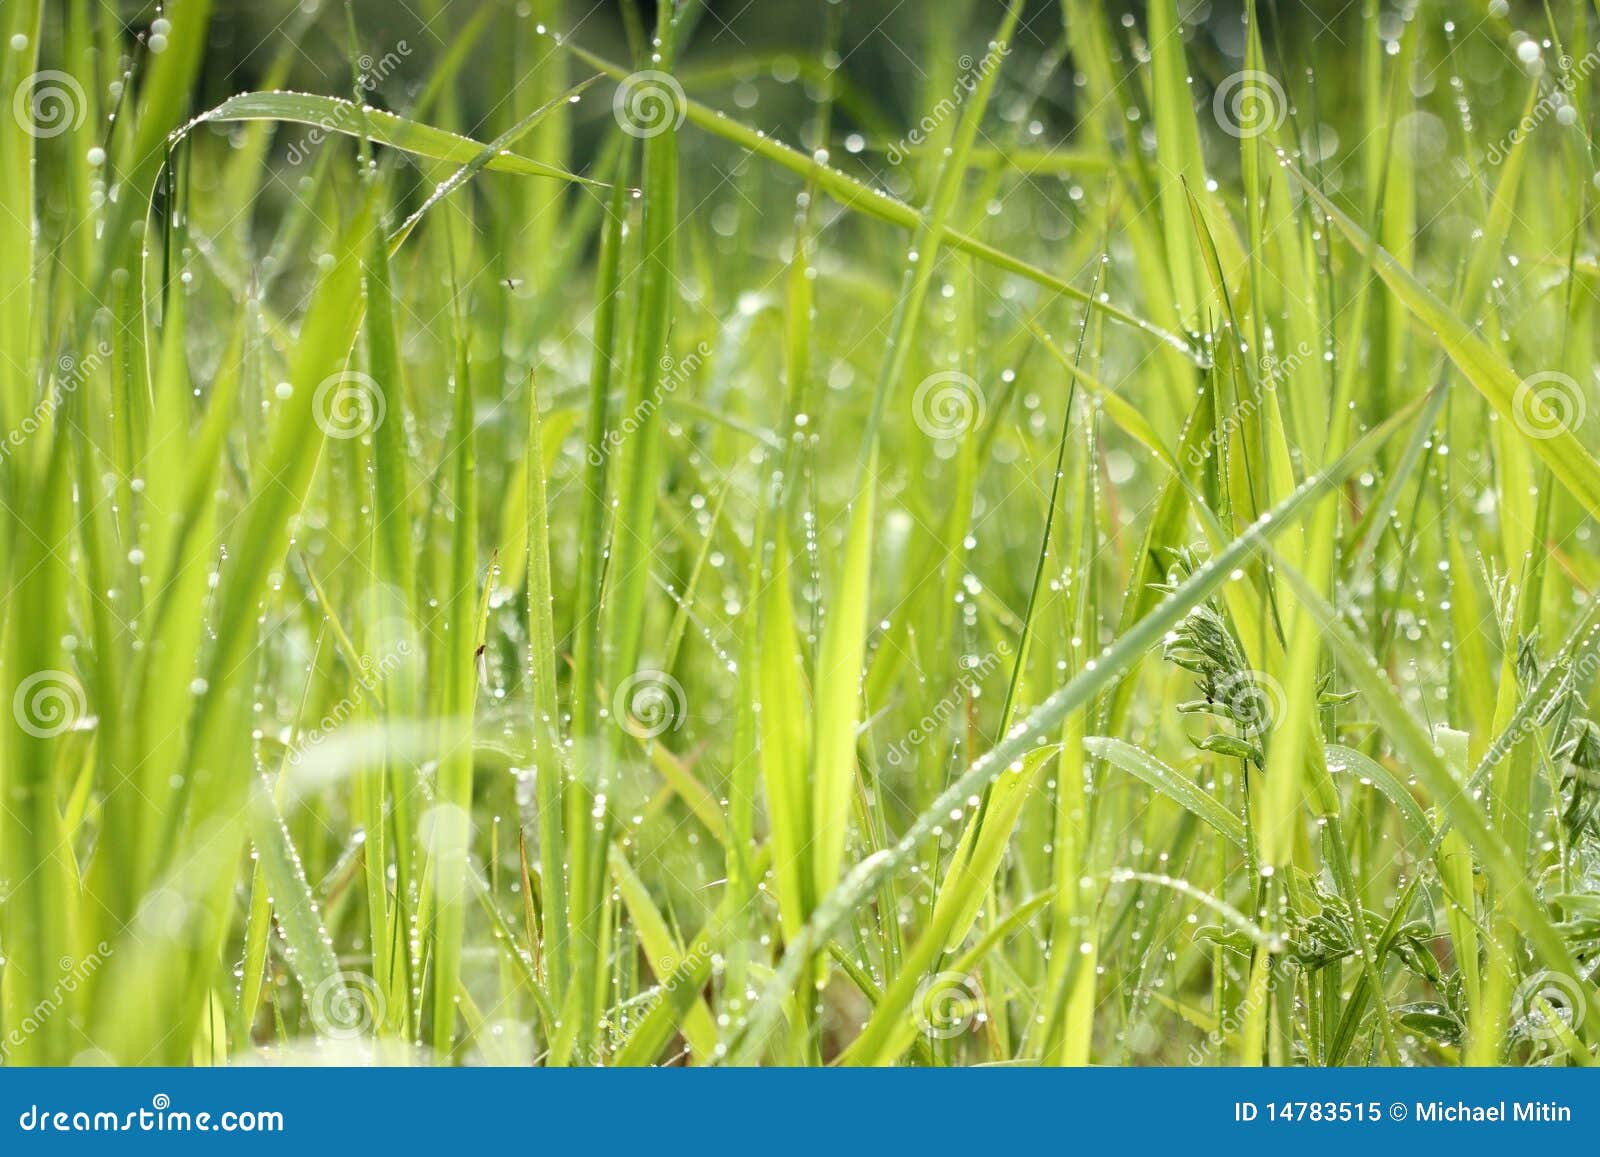 fresh morning dew in grass